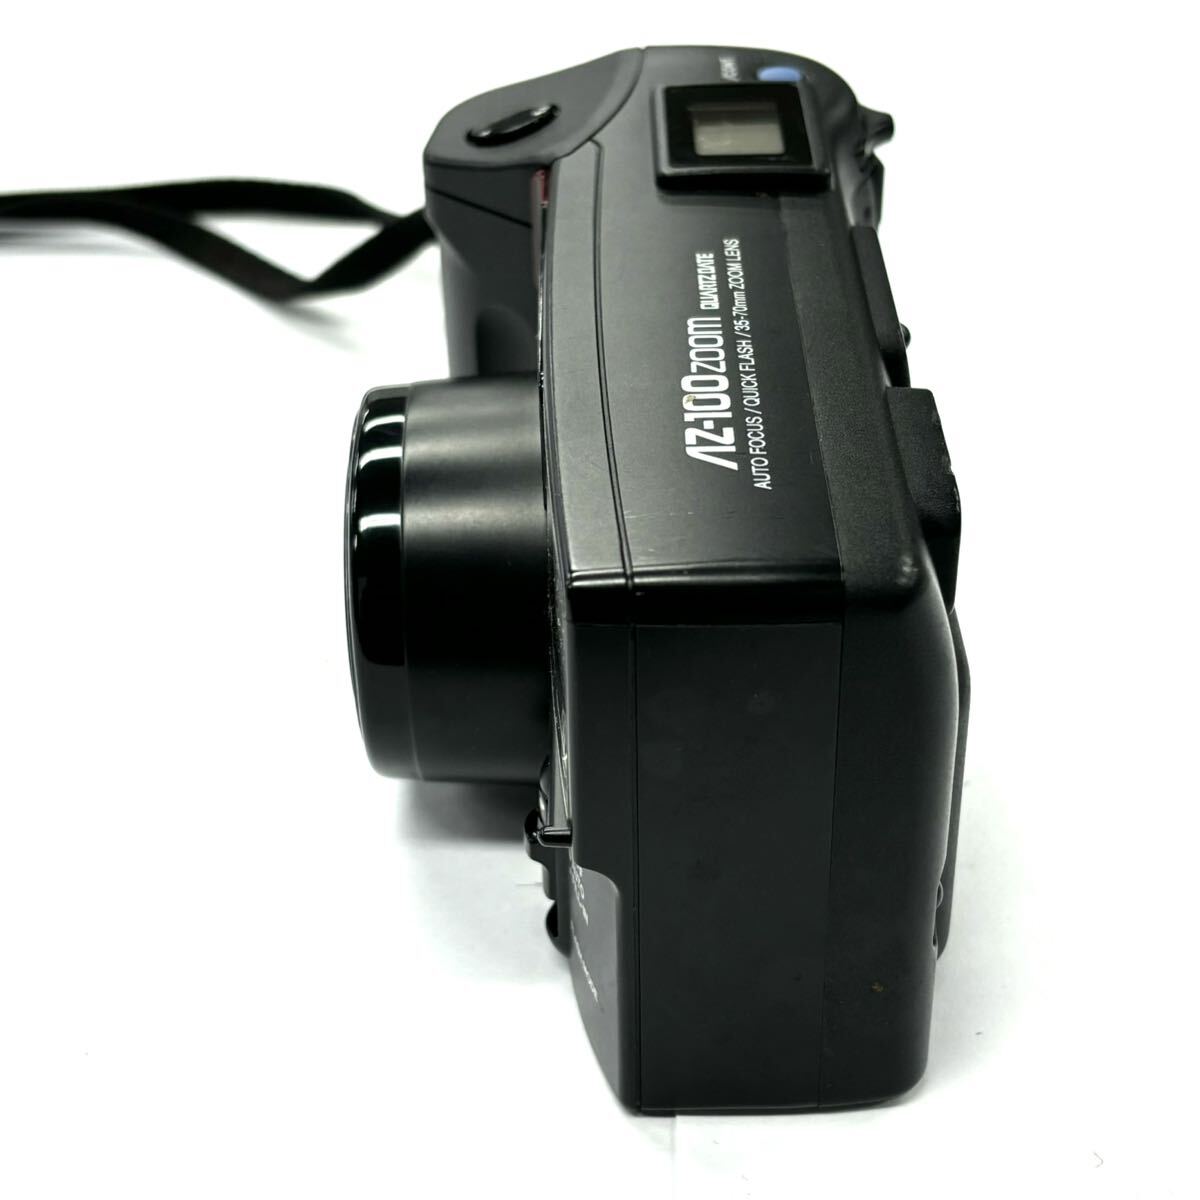 H2815 フィルムカメラ カメラ OLYMPUS オリンパス AZ-100 ZOOM QUARTZDATE AUTO FOCUS/QUICK FLASH / 35-70mm ジャンク品 中古 訳ありの画像6